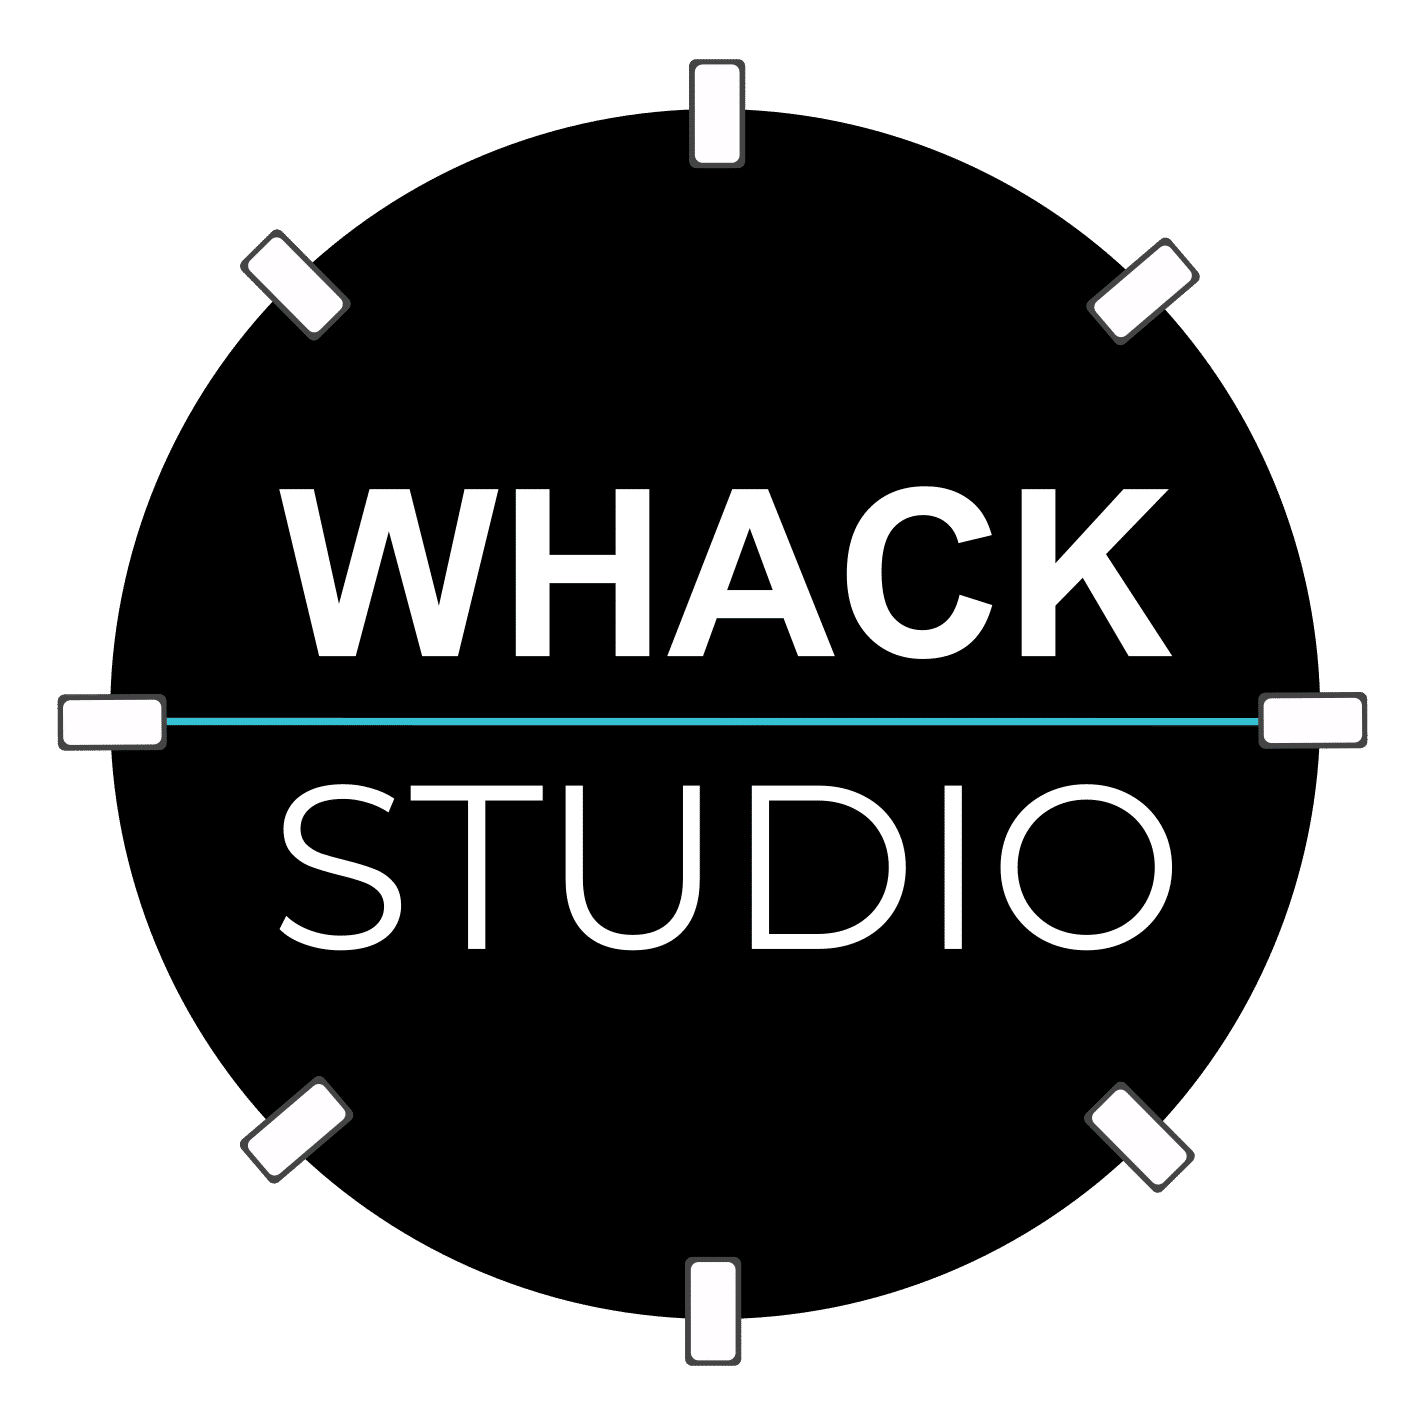 Whack studio Main logo